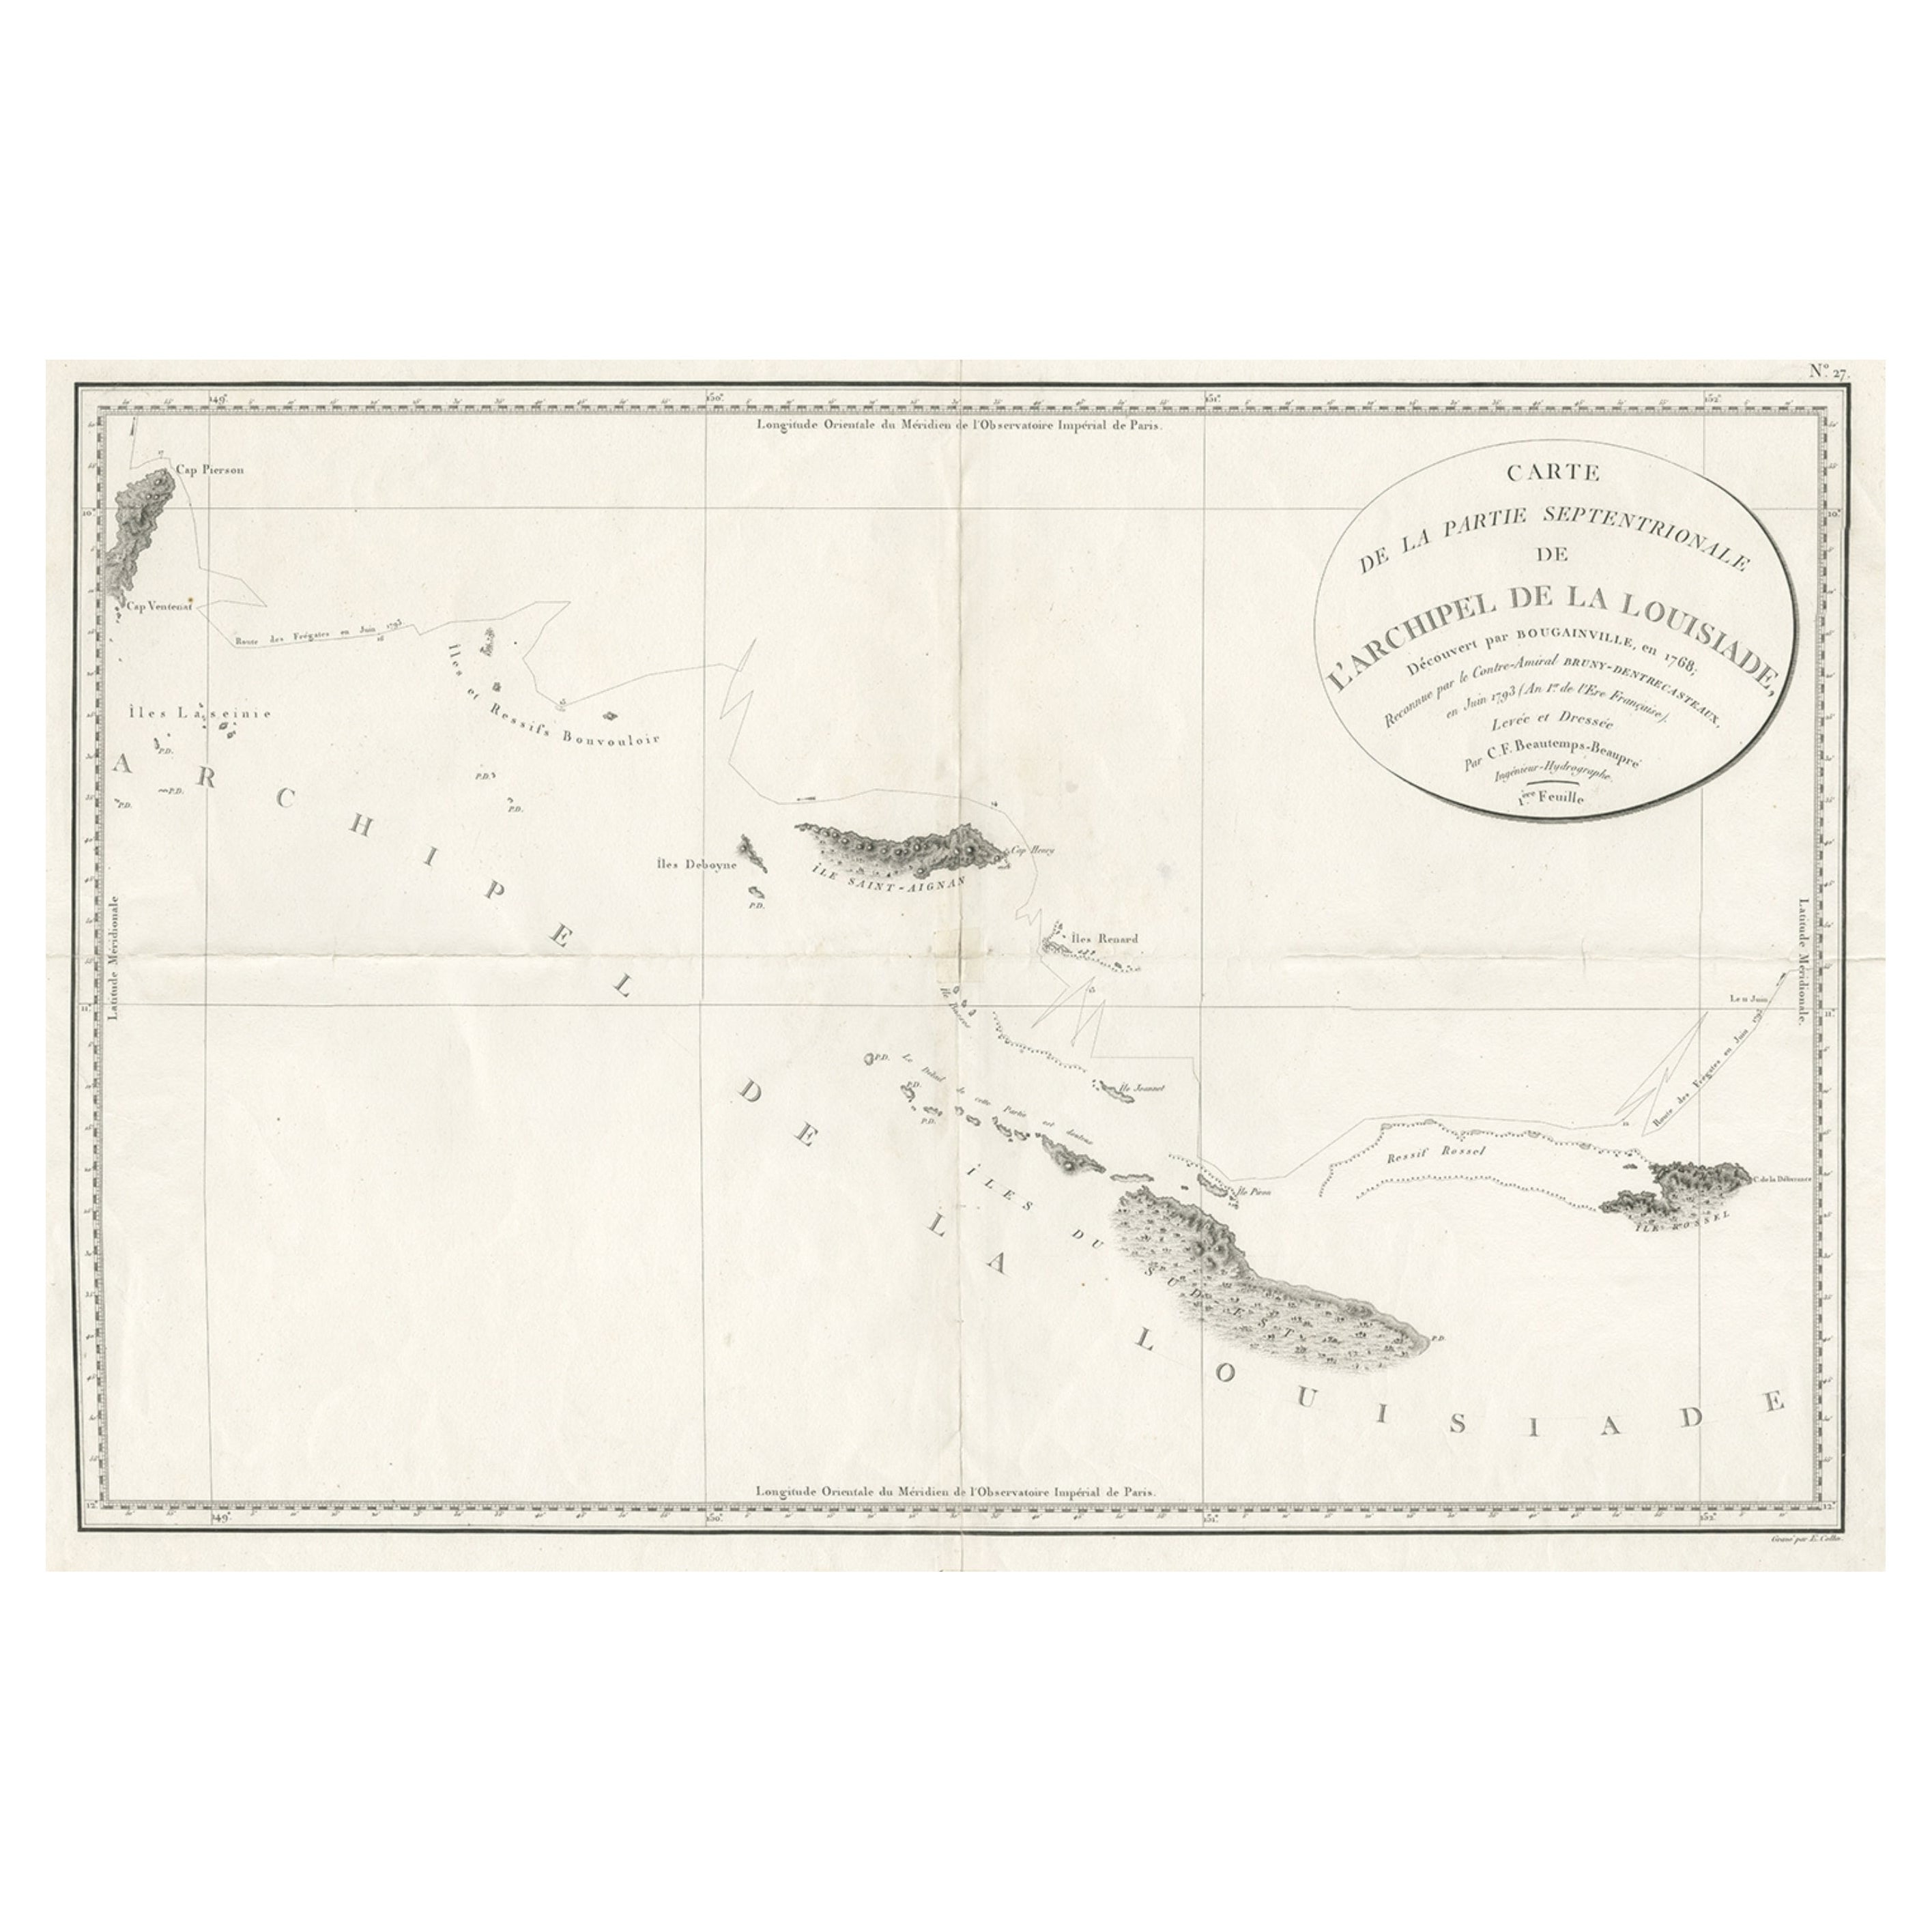 Uncommon Rare Map Showing The Louisiade Archipelago, Papua New Guinea, ca.1798 For Sale